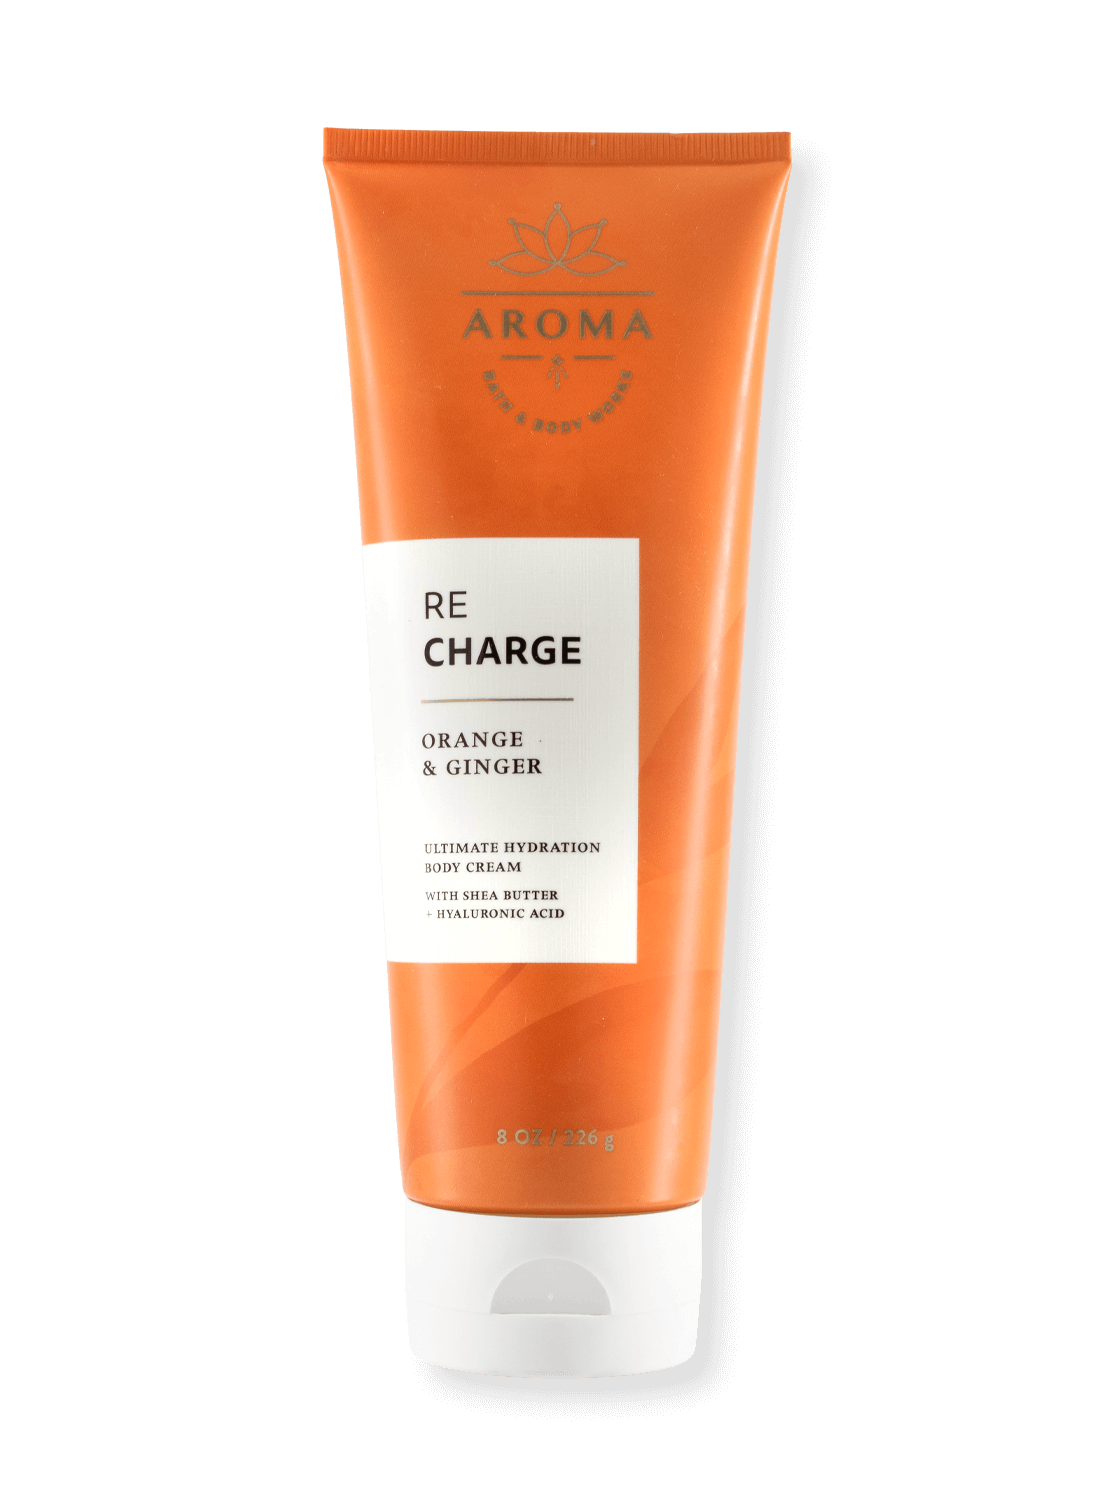 Body Cream - AROMA - Re Charge - Orange & Ginger - 226g